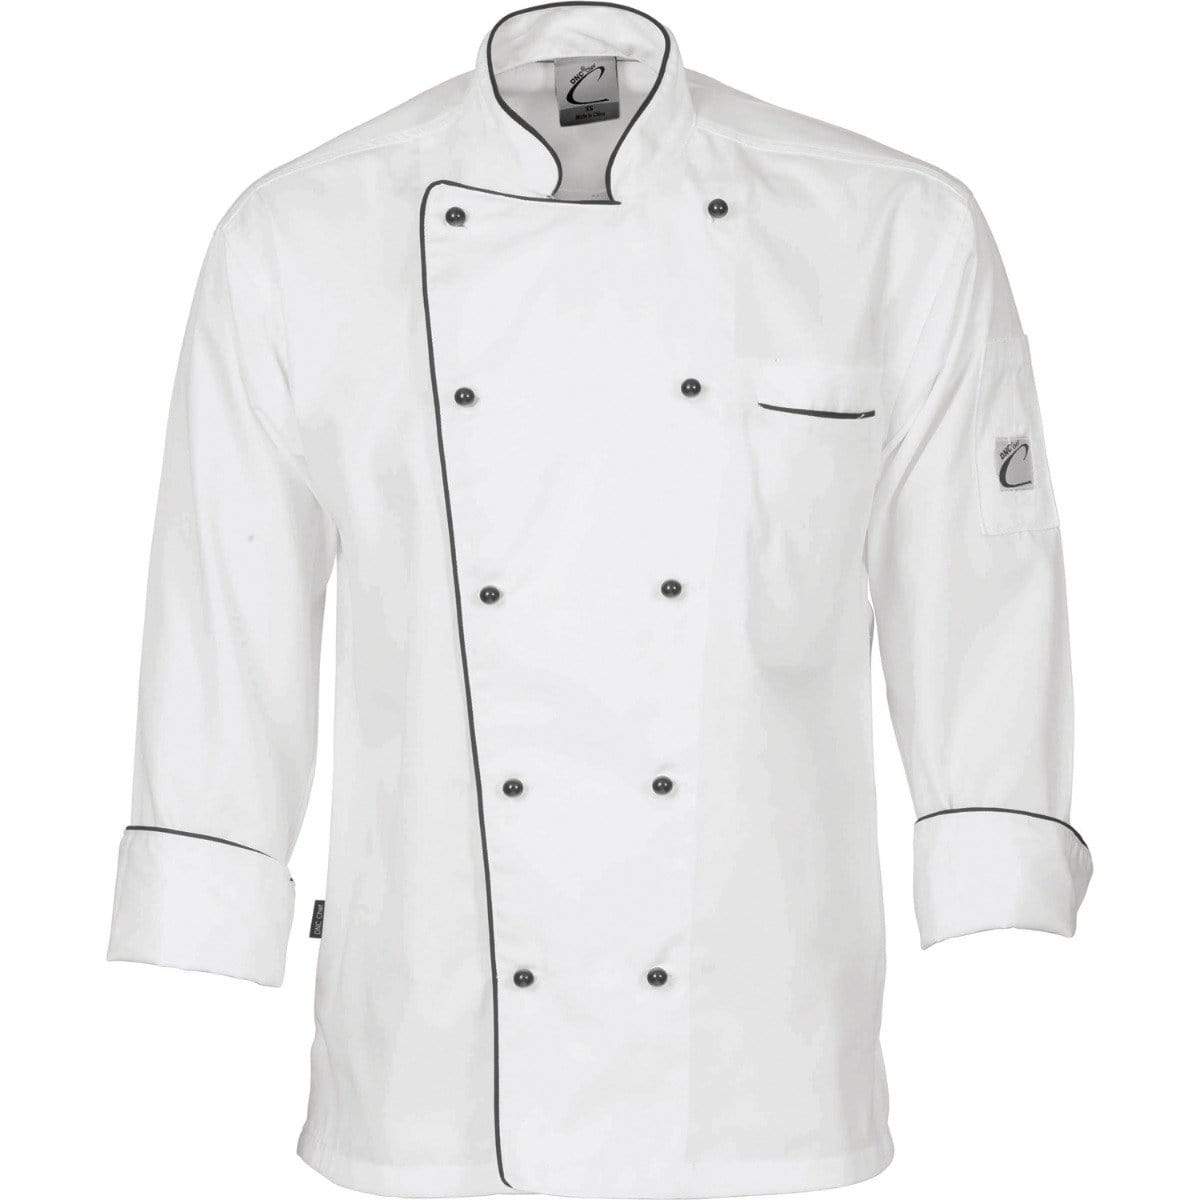 Dnc Workwear Classic Long Sleeve Chef Jacket - 1112 Hospitality & Chefwear DNC Workwear White XS 